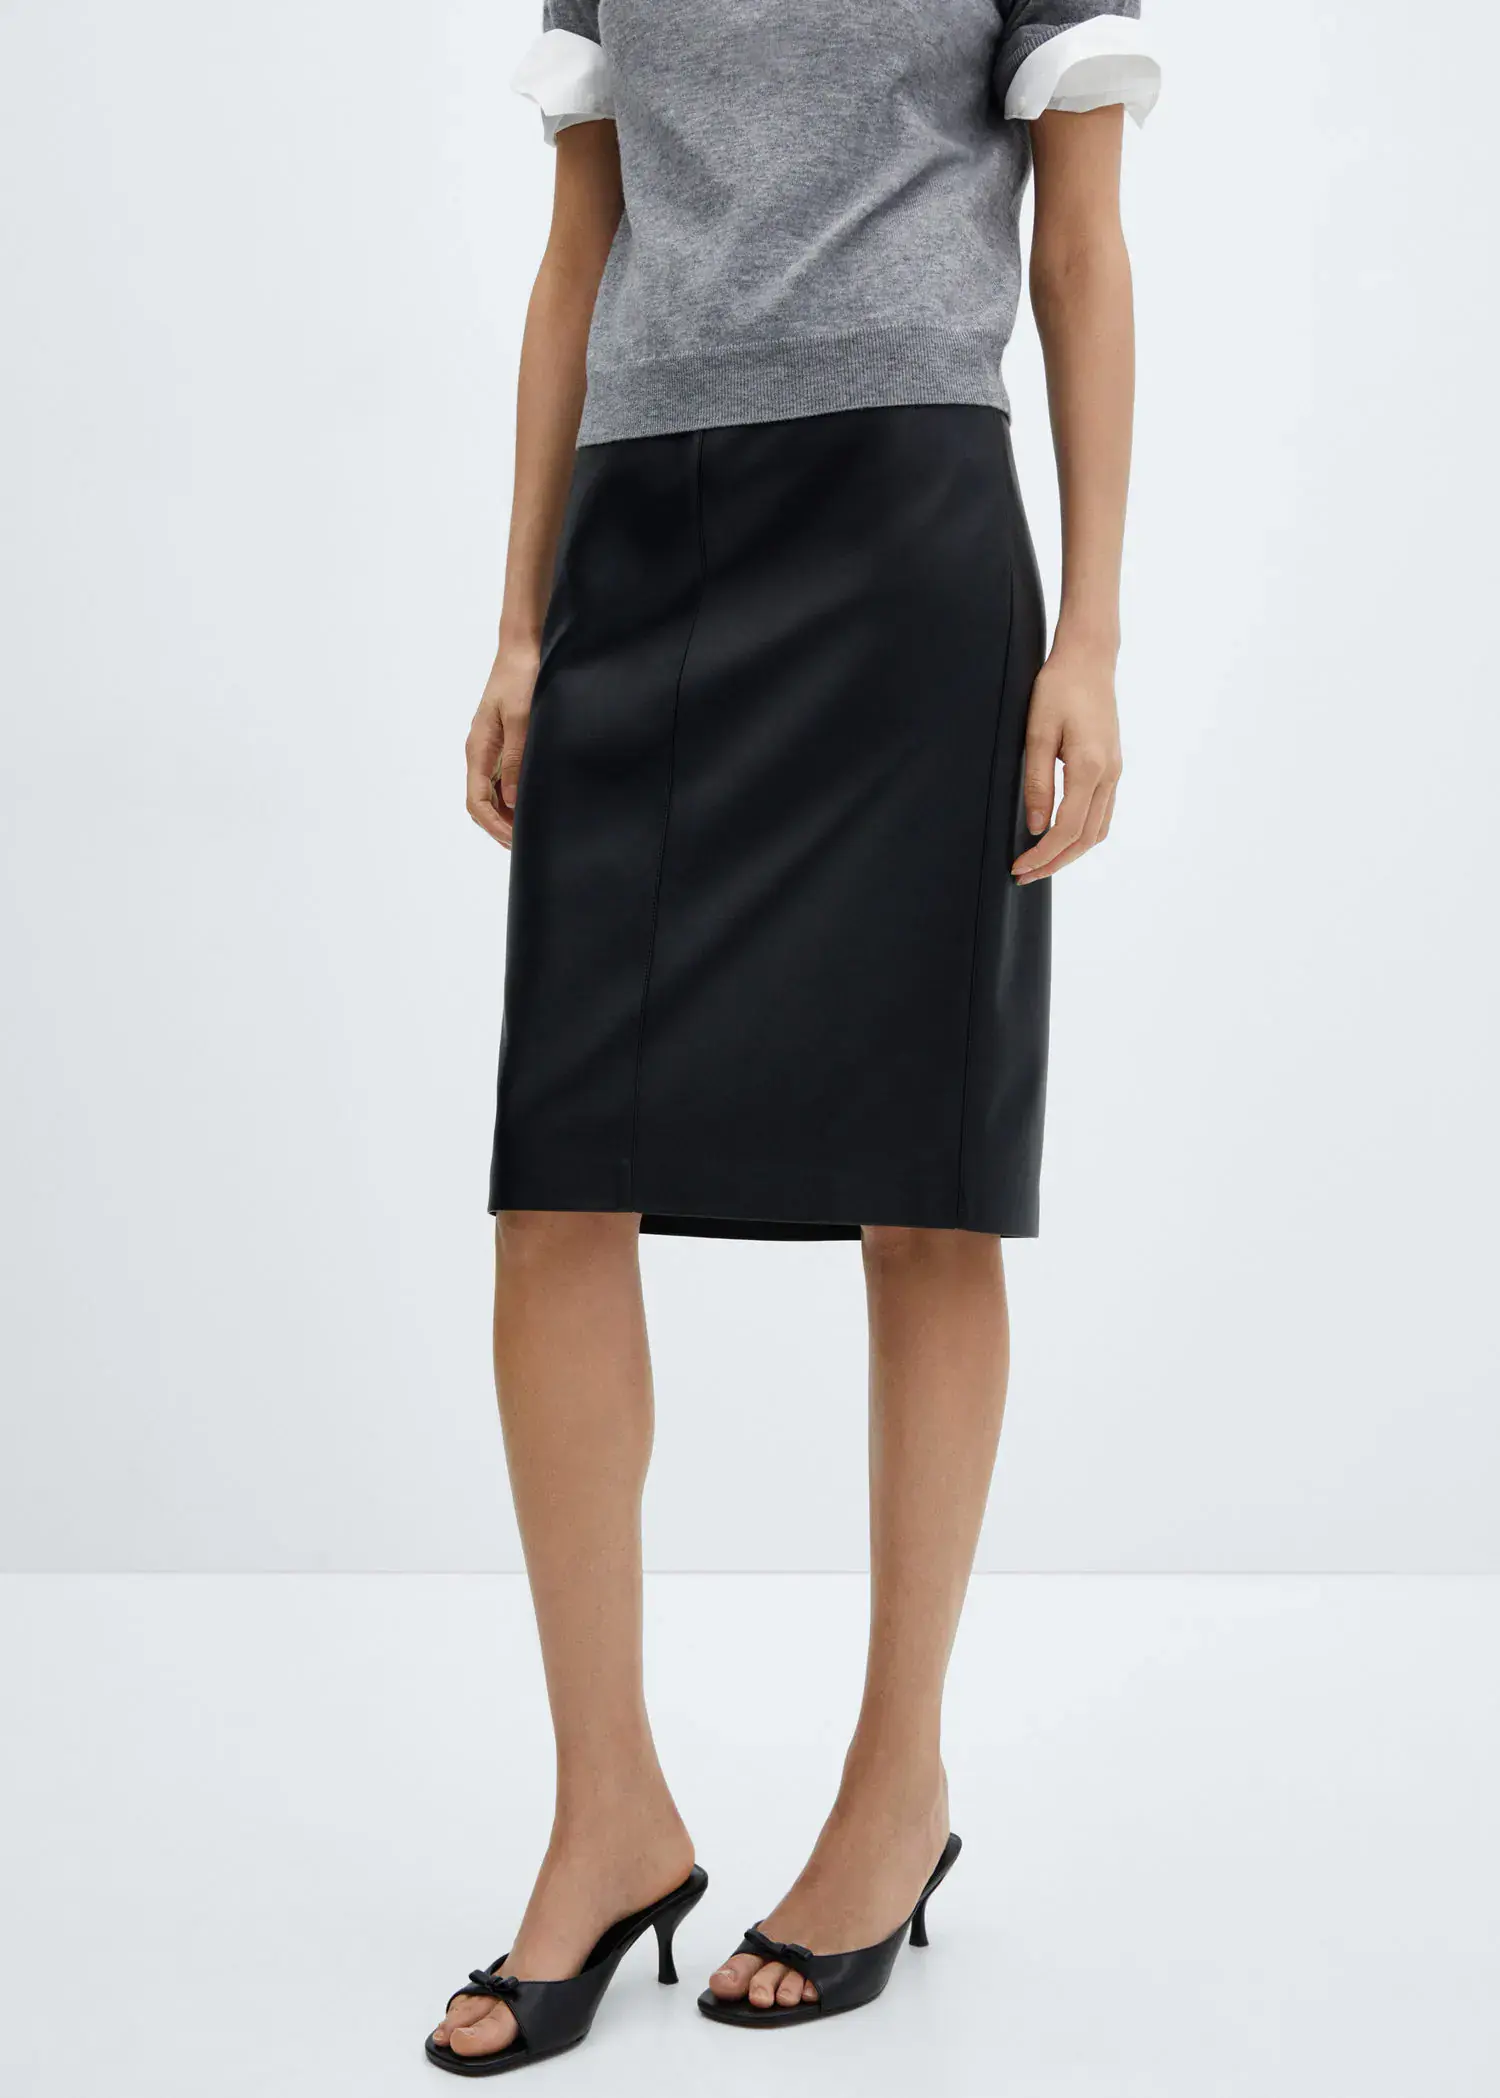 Mango Faux-leather pencil skirt. 2